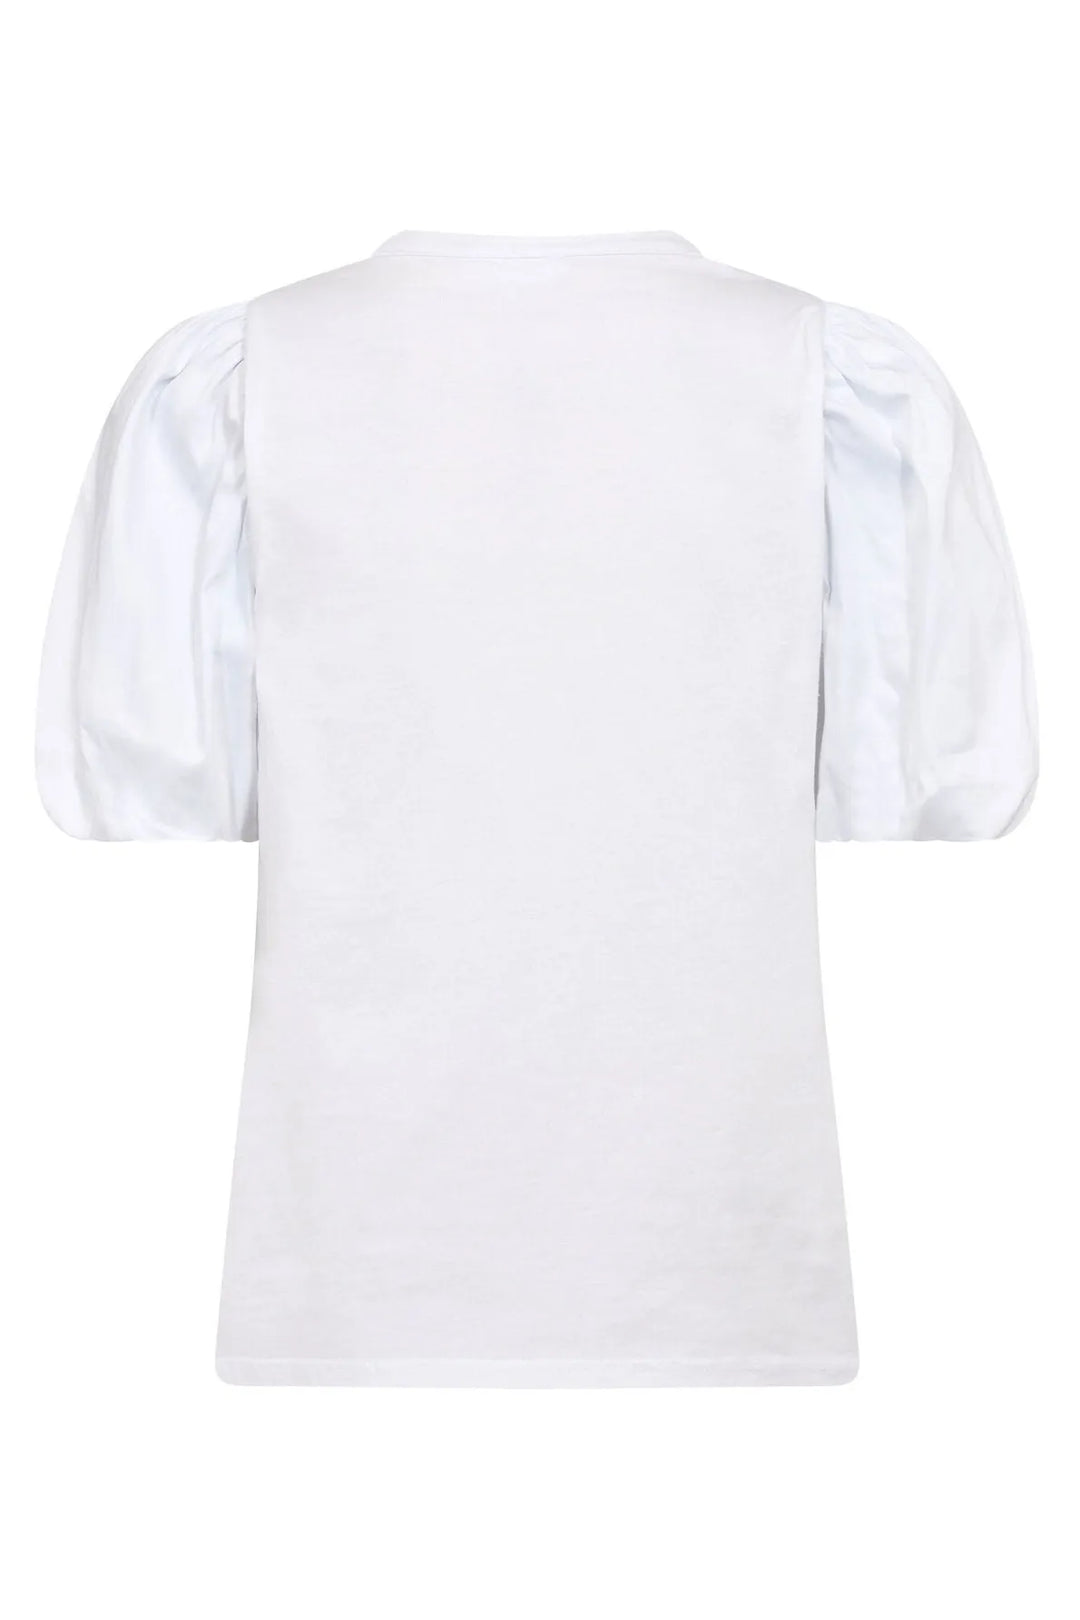 T-shirt | Selected Femme Kowa 12 Tee, hvid